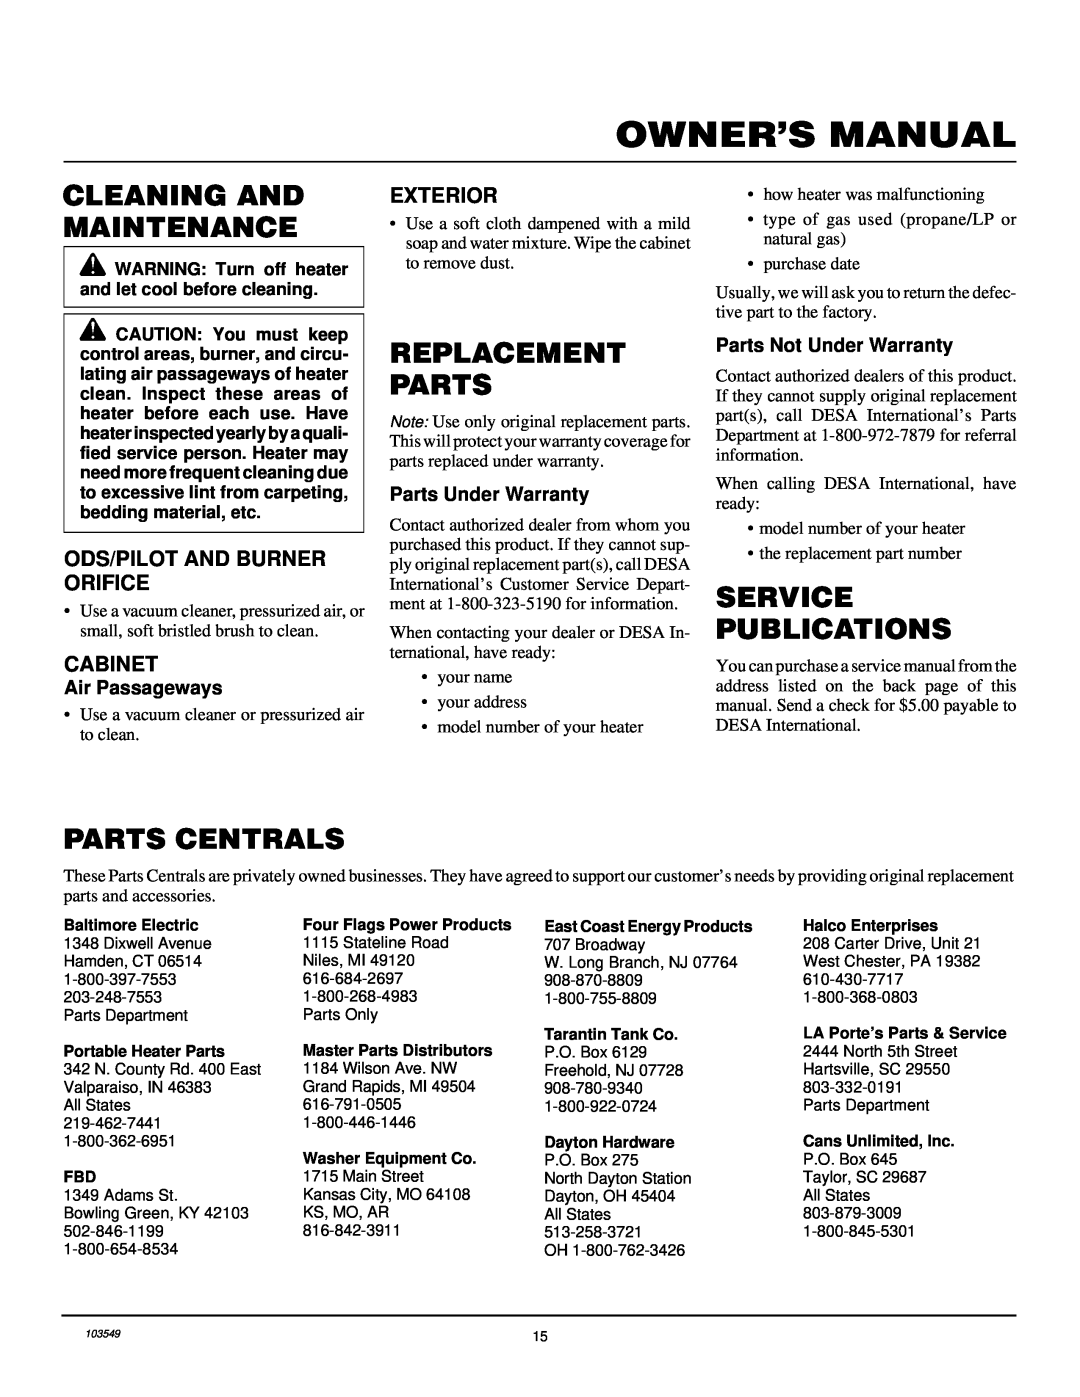 Desa CGN10RL Cleaning And Maintenance, Replacement Parts, Service Publications, Parts Centrals, Air Passageways 